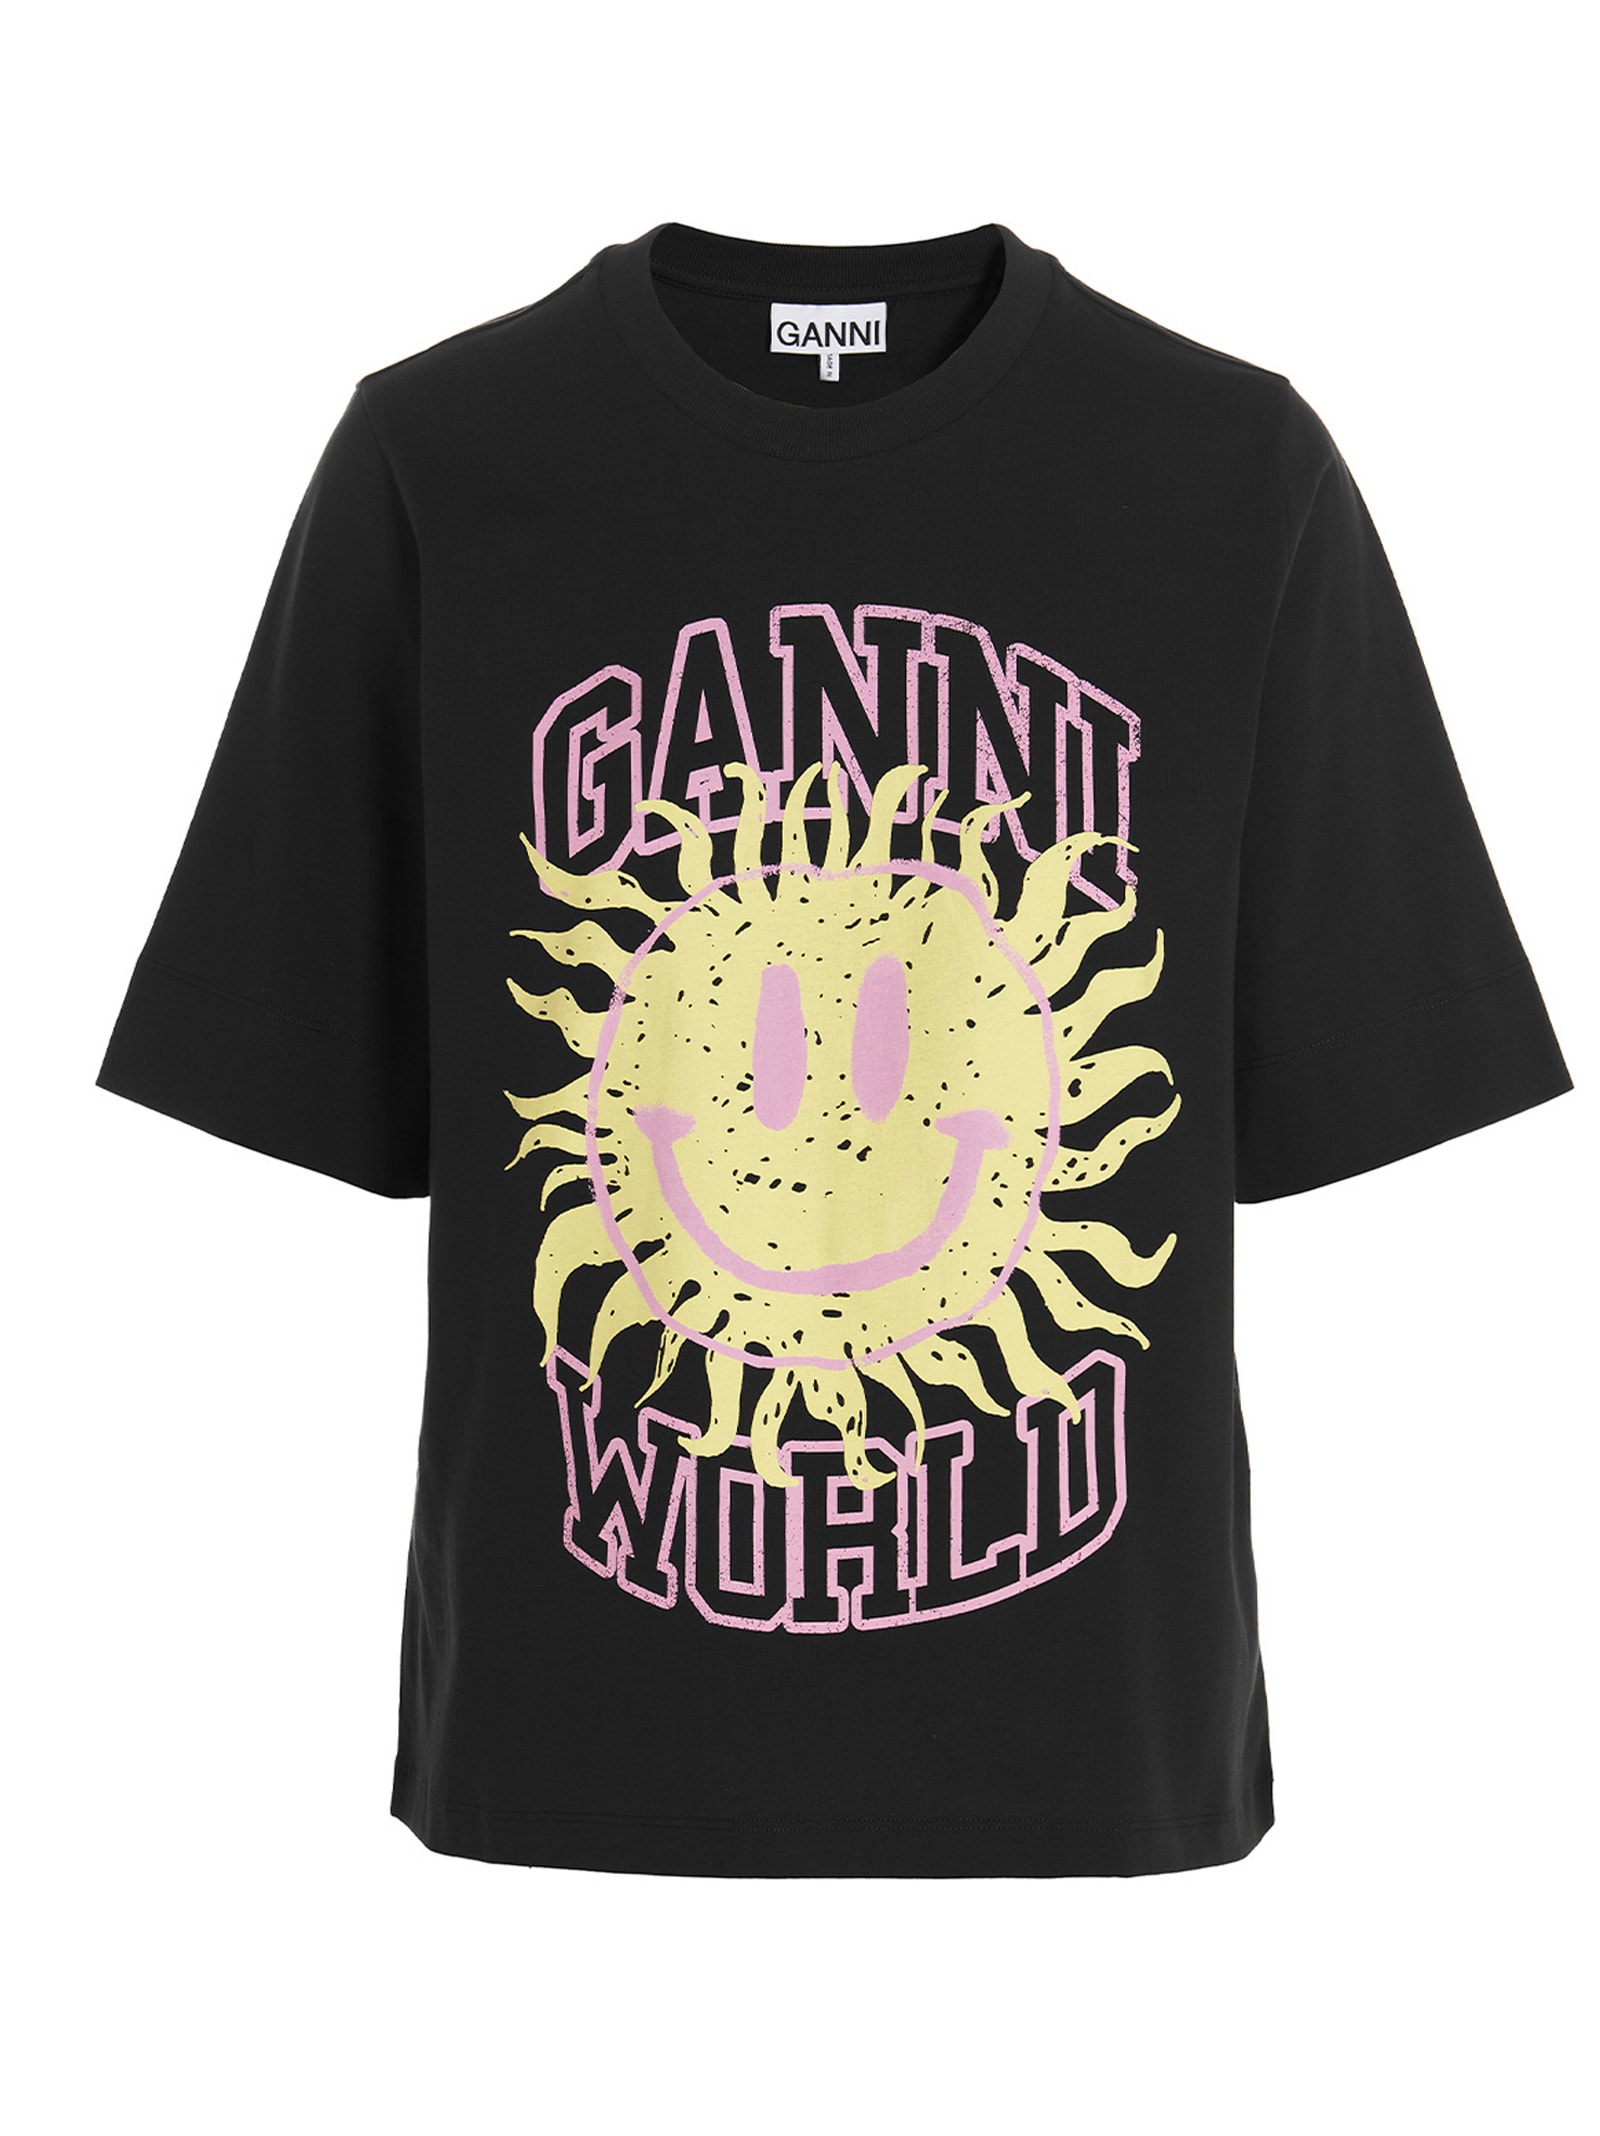 Ganni T-shirt smiley World